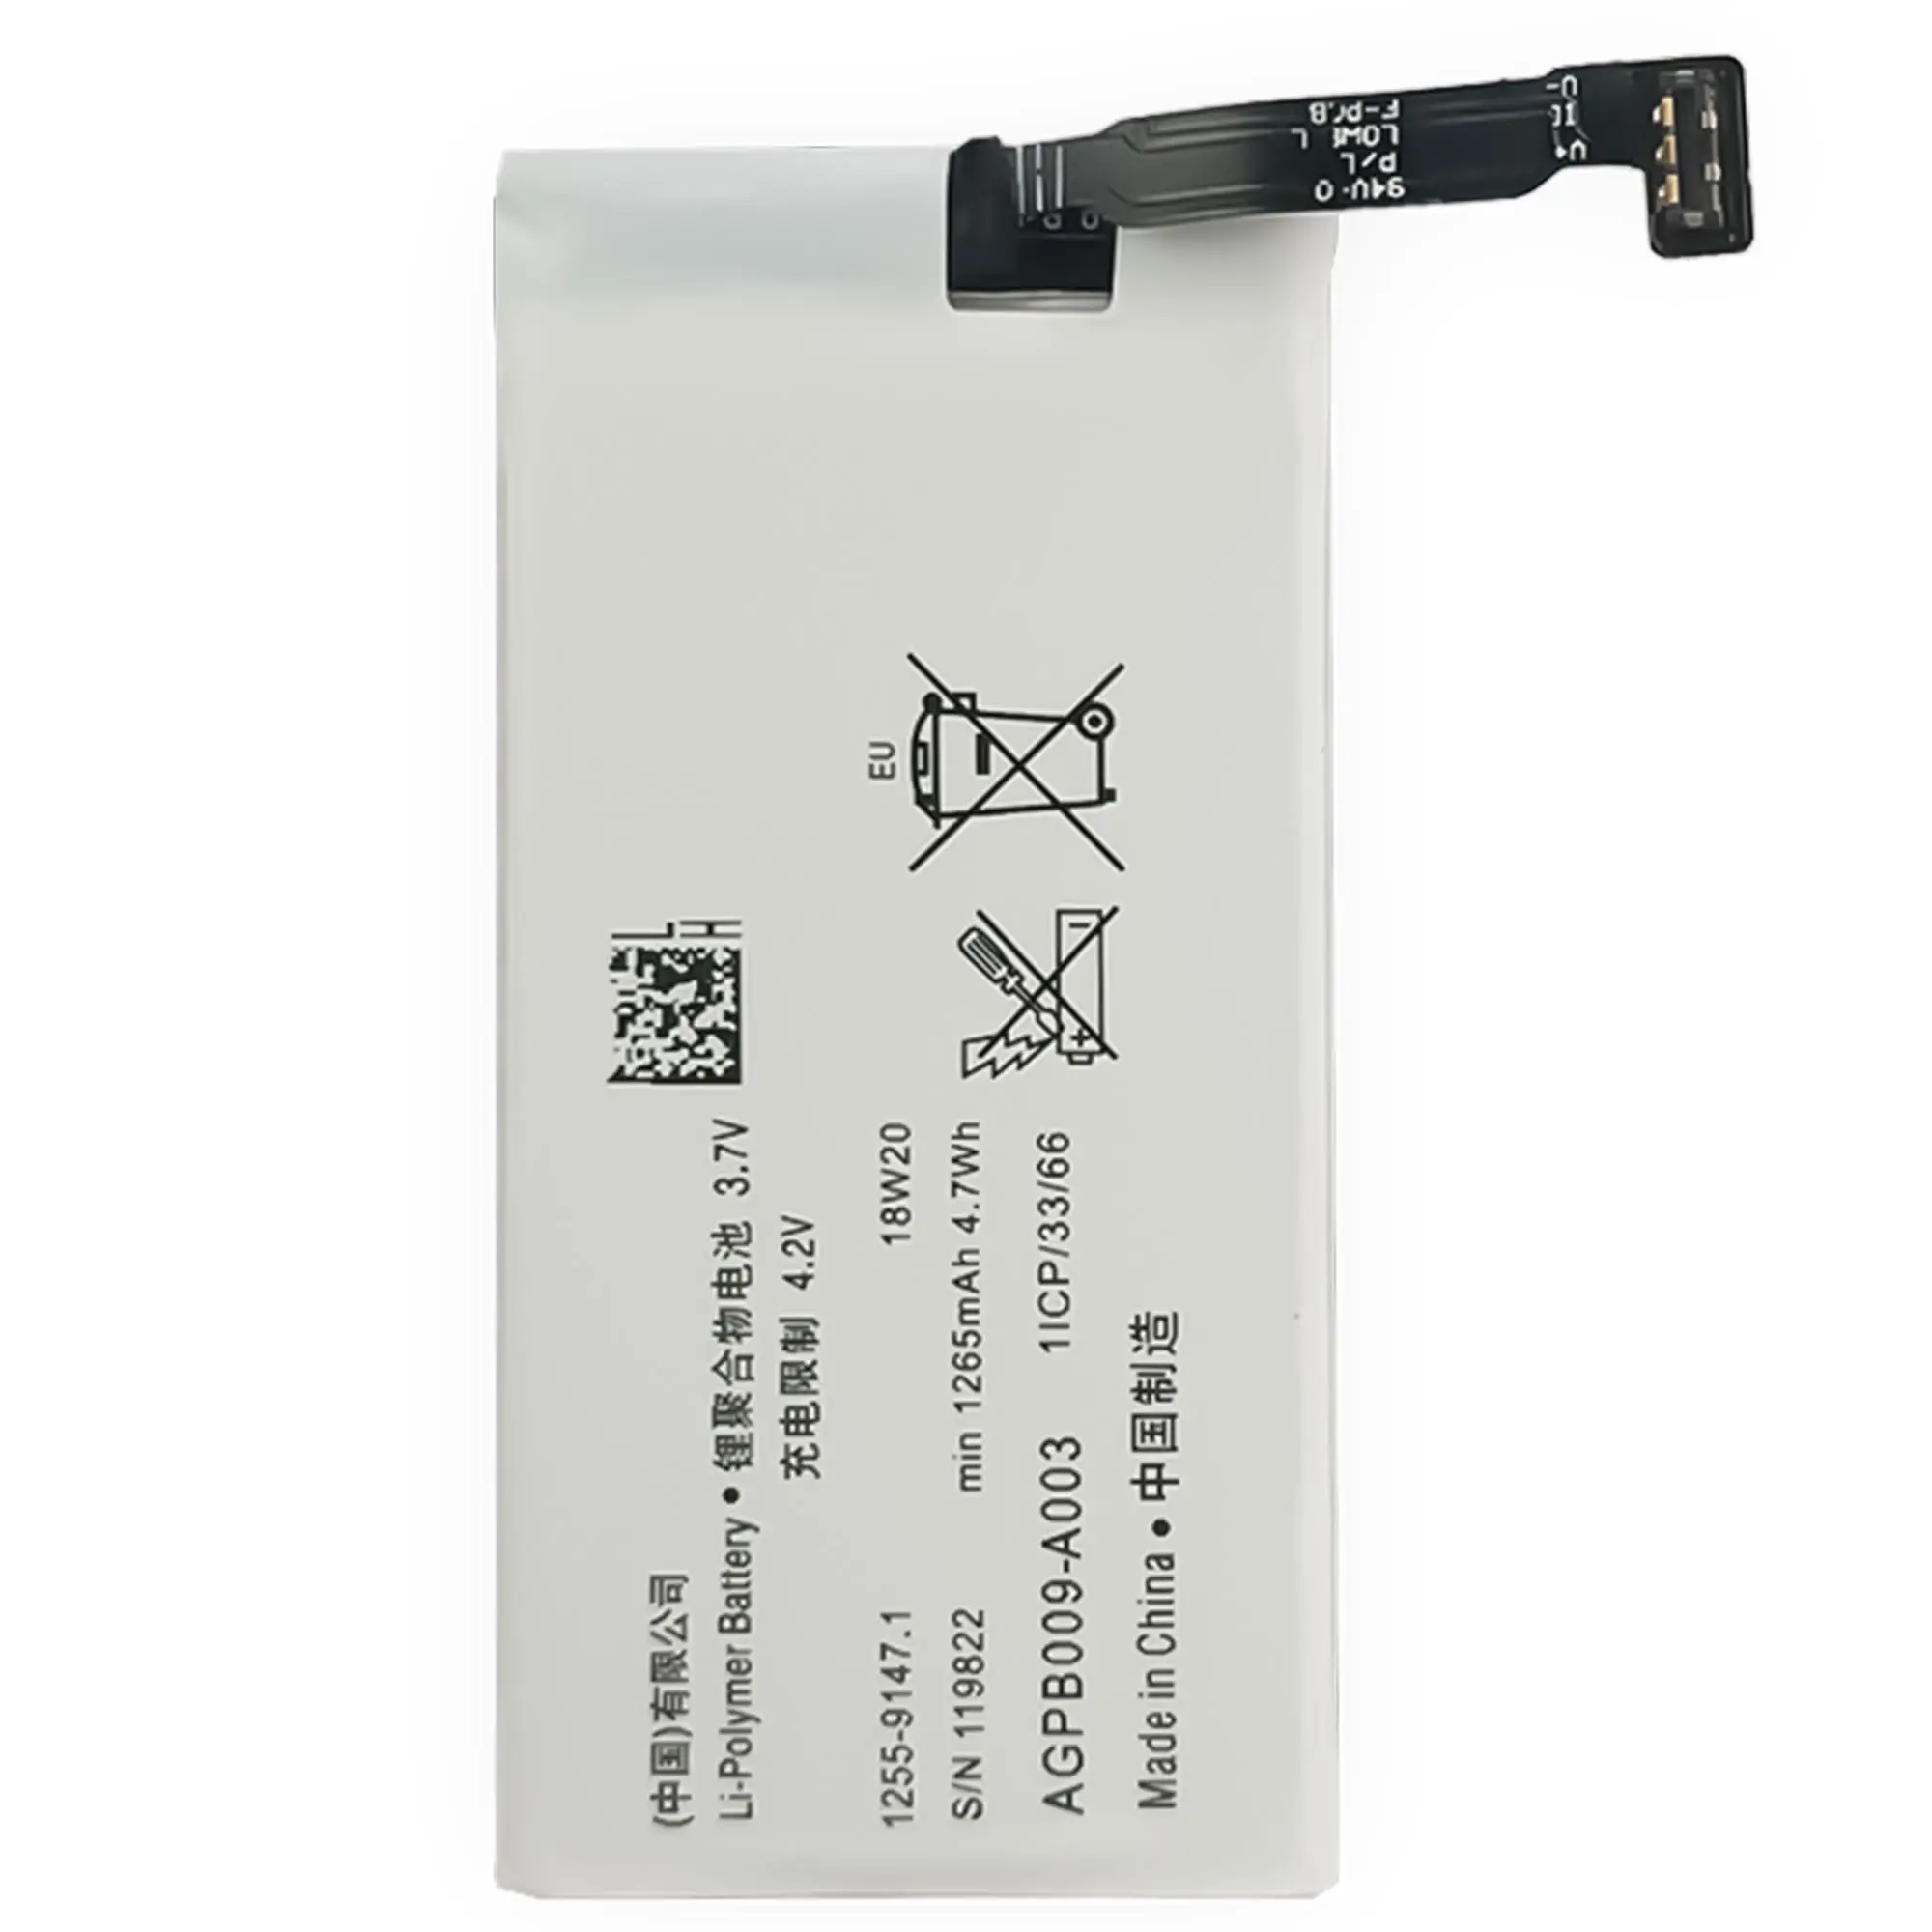 1265mAh AGPB009-A003 Xperia go Mobile phone battery for sony Xperia Advance